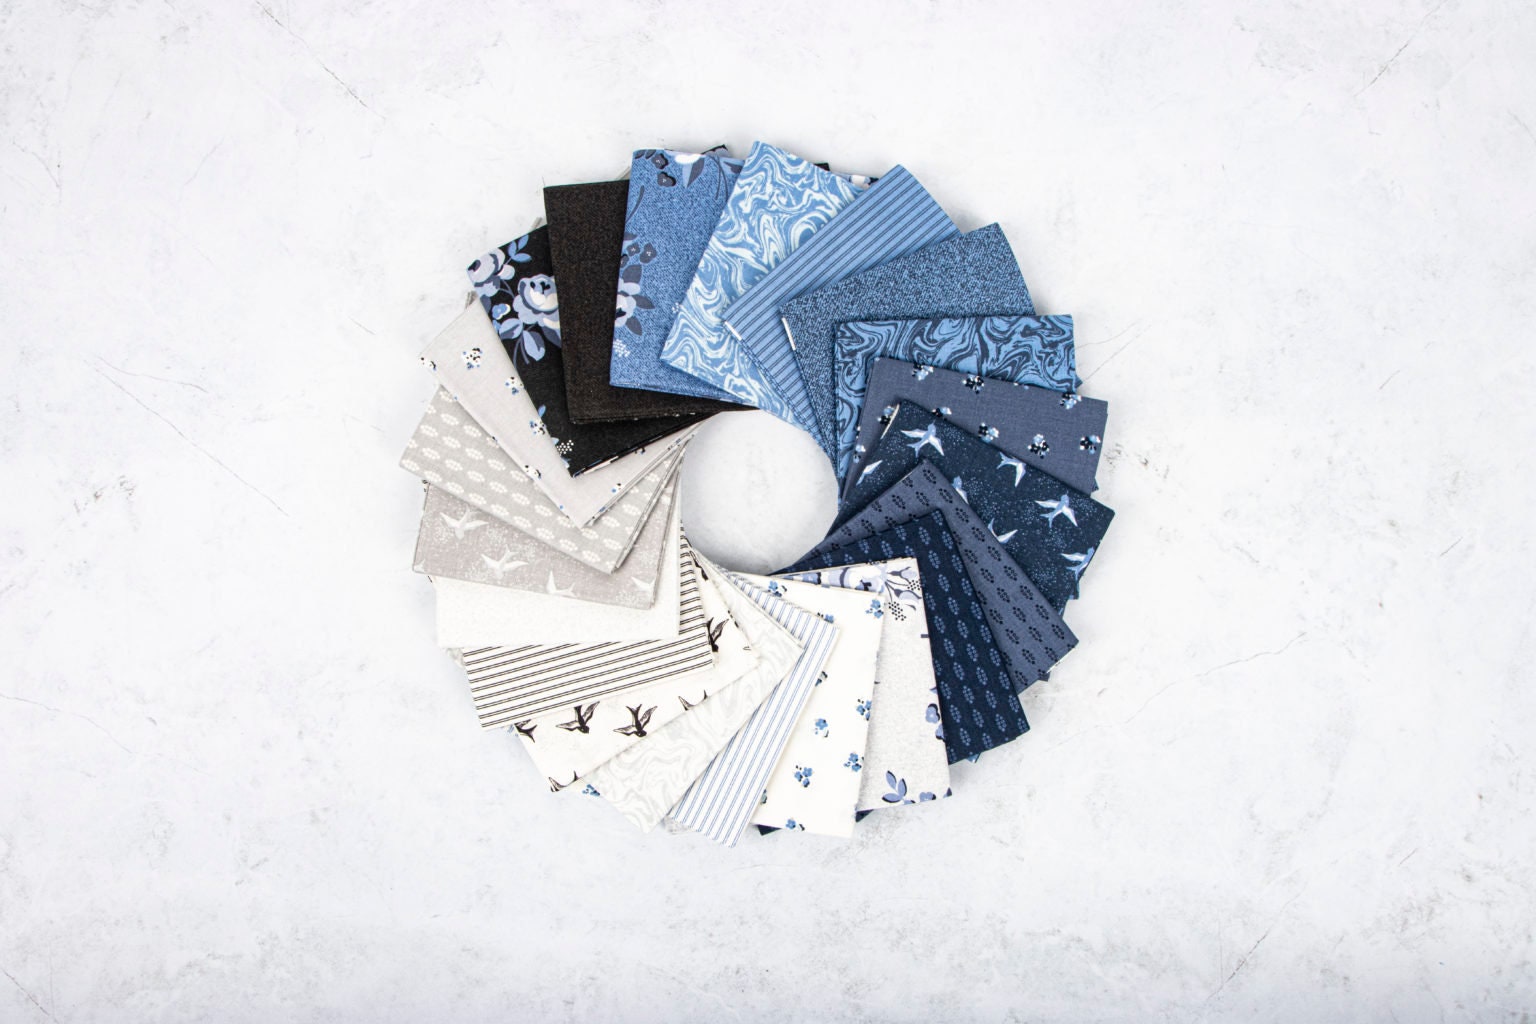 Blue Jean Fat Quarter Bundle 21 pieces - Riley Blake Designs - Pre cut  Precut - Quilting Cotton Fabric